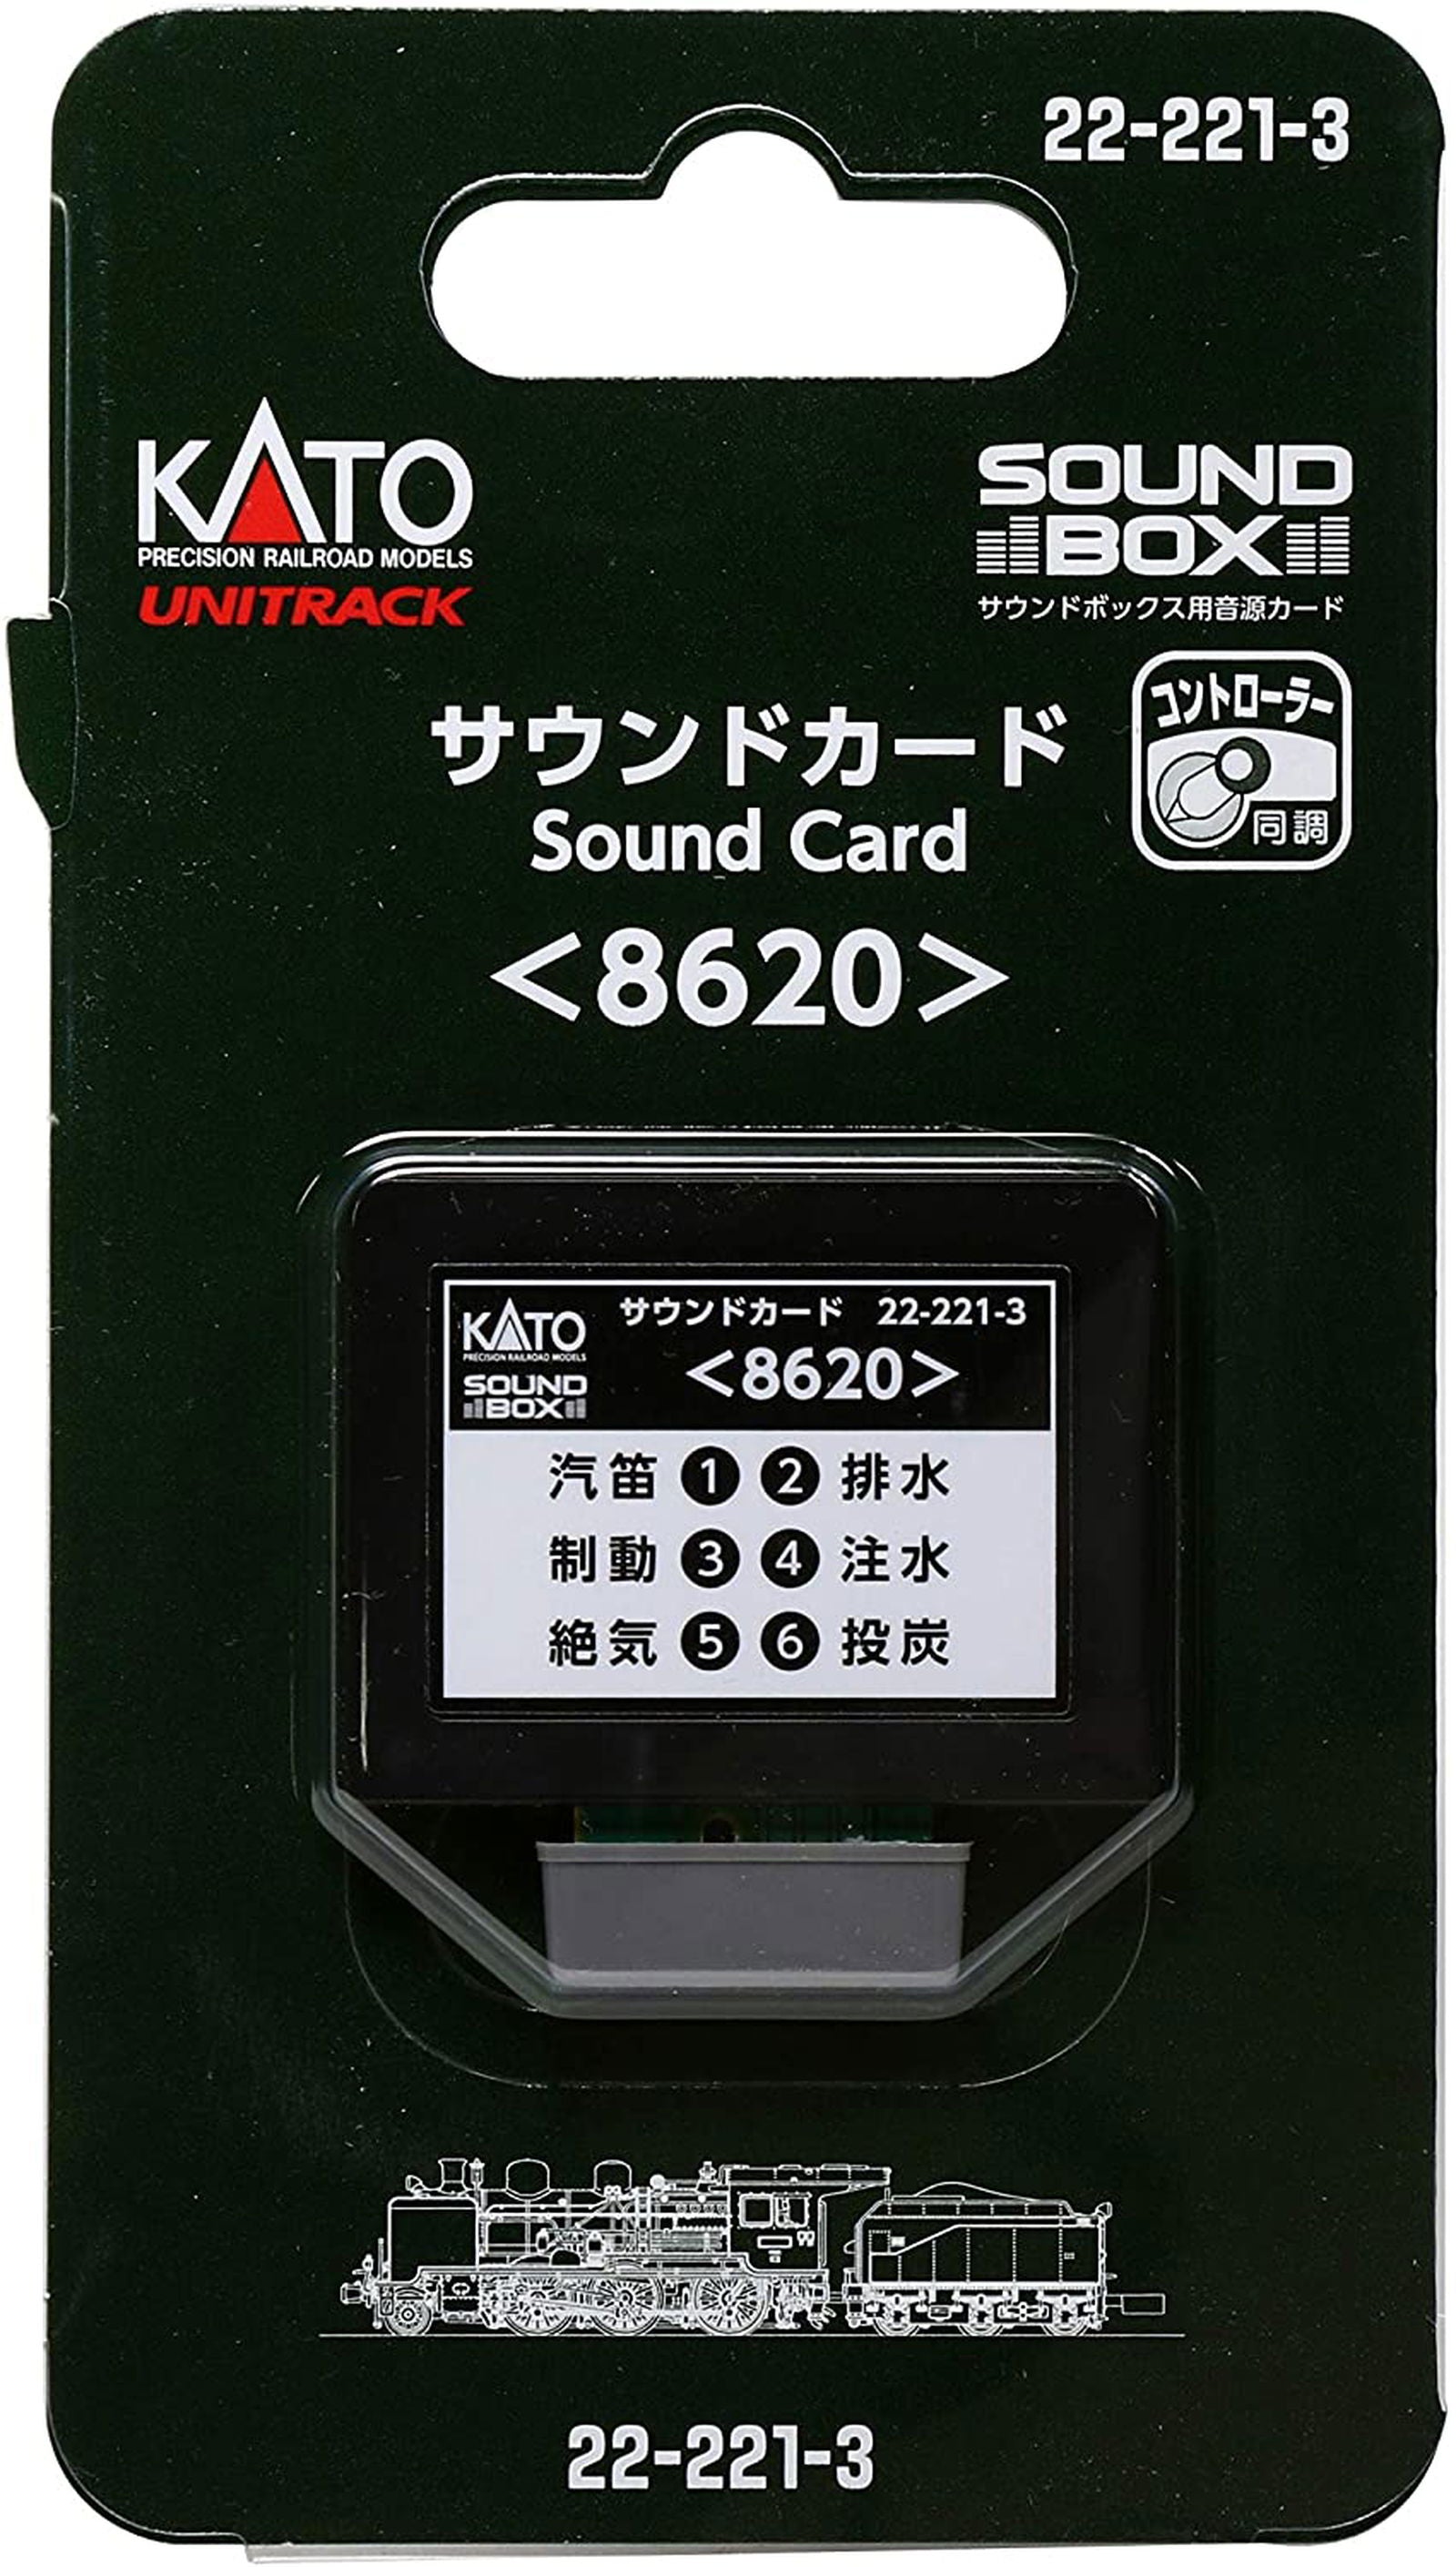 KATO 22-221-3 Unitrack Sound Card `8620` [for Sound Box] - BanzaiHobby